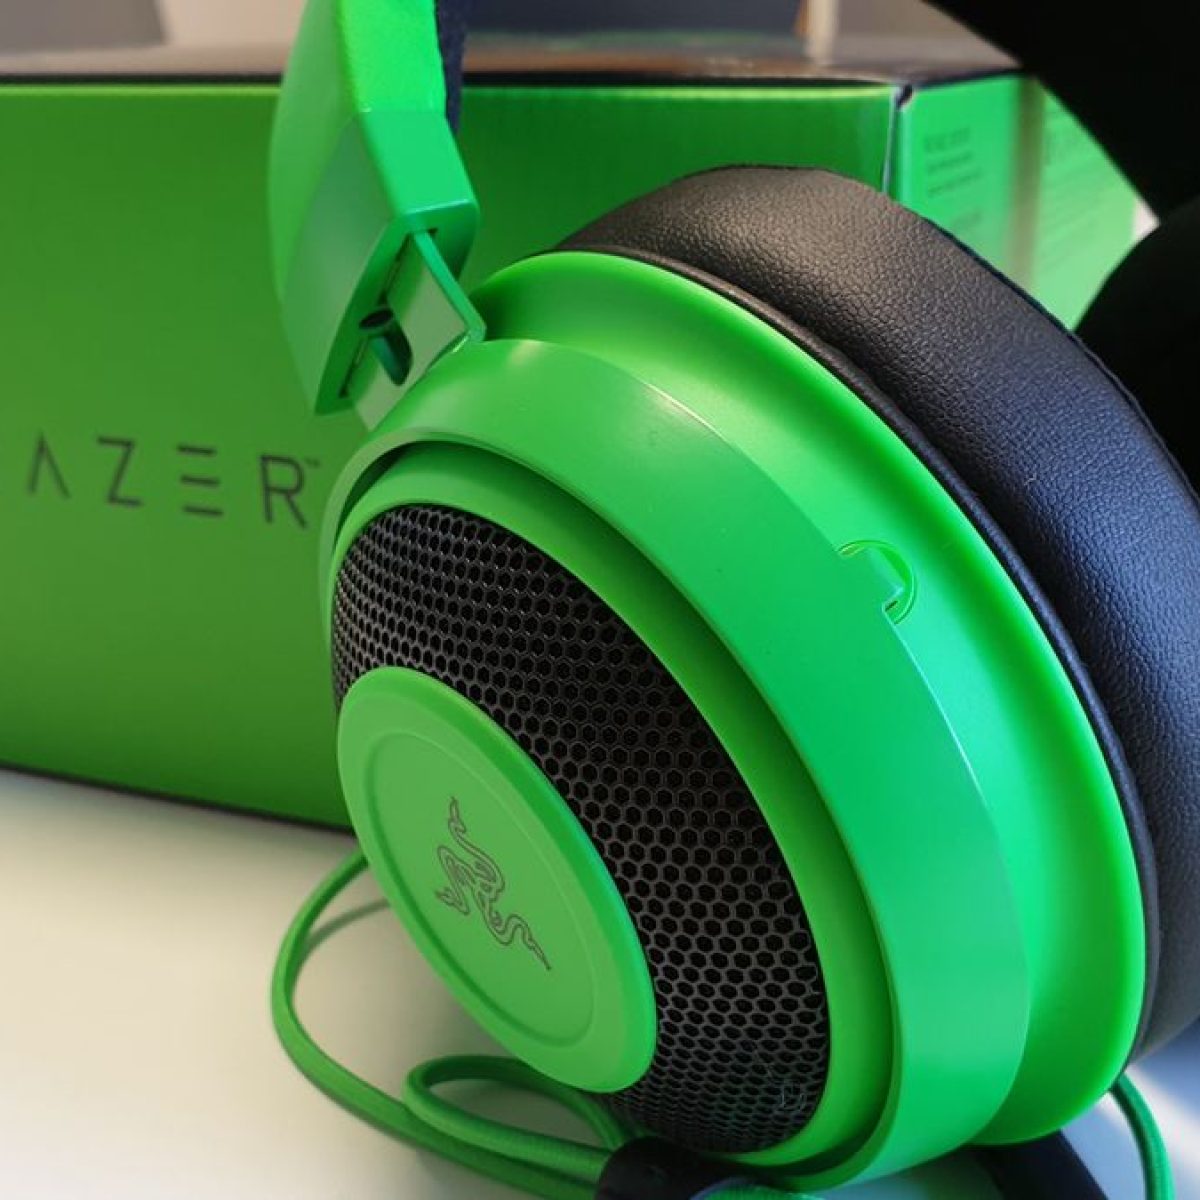 Xbox Audio Bliss: Connecting Your Razer Headset